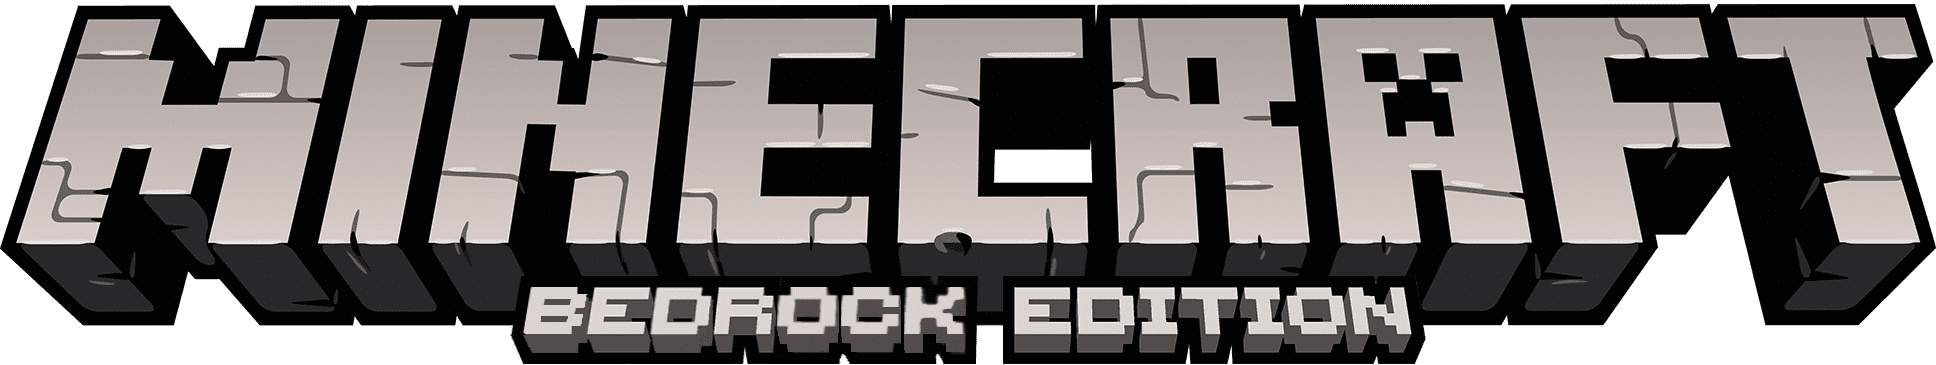 Minecraft Bedrock Edition logo